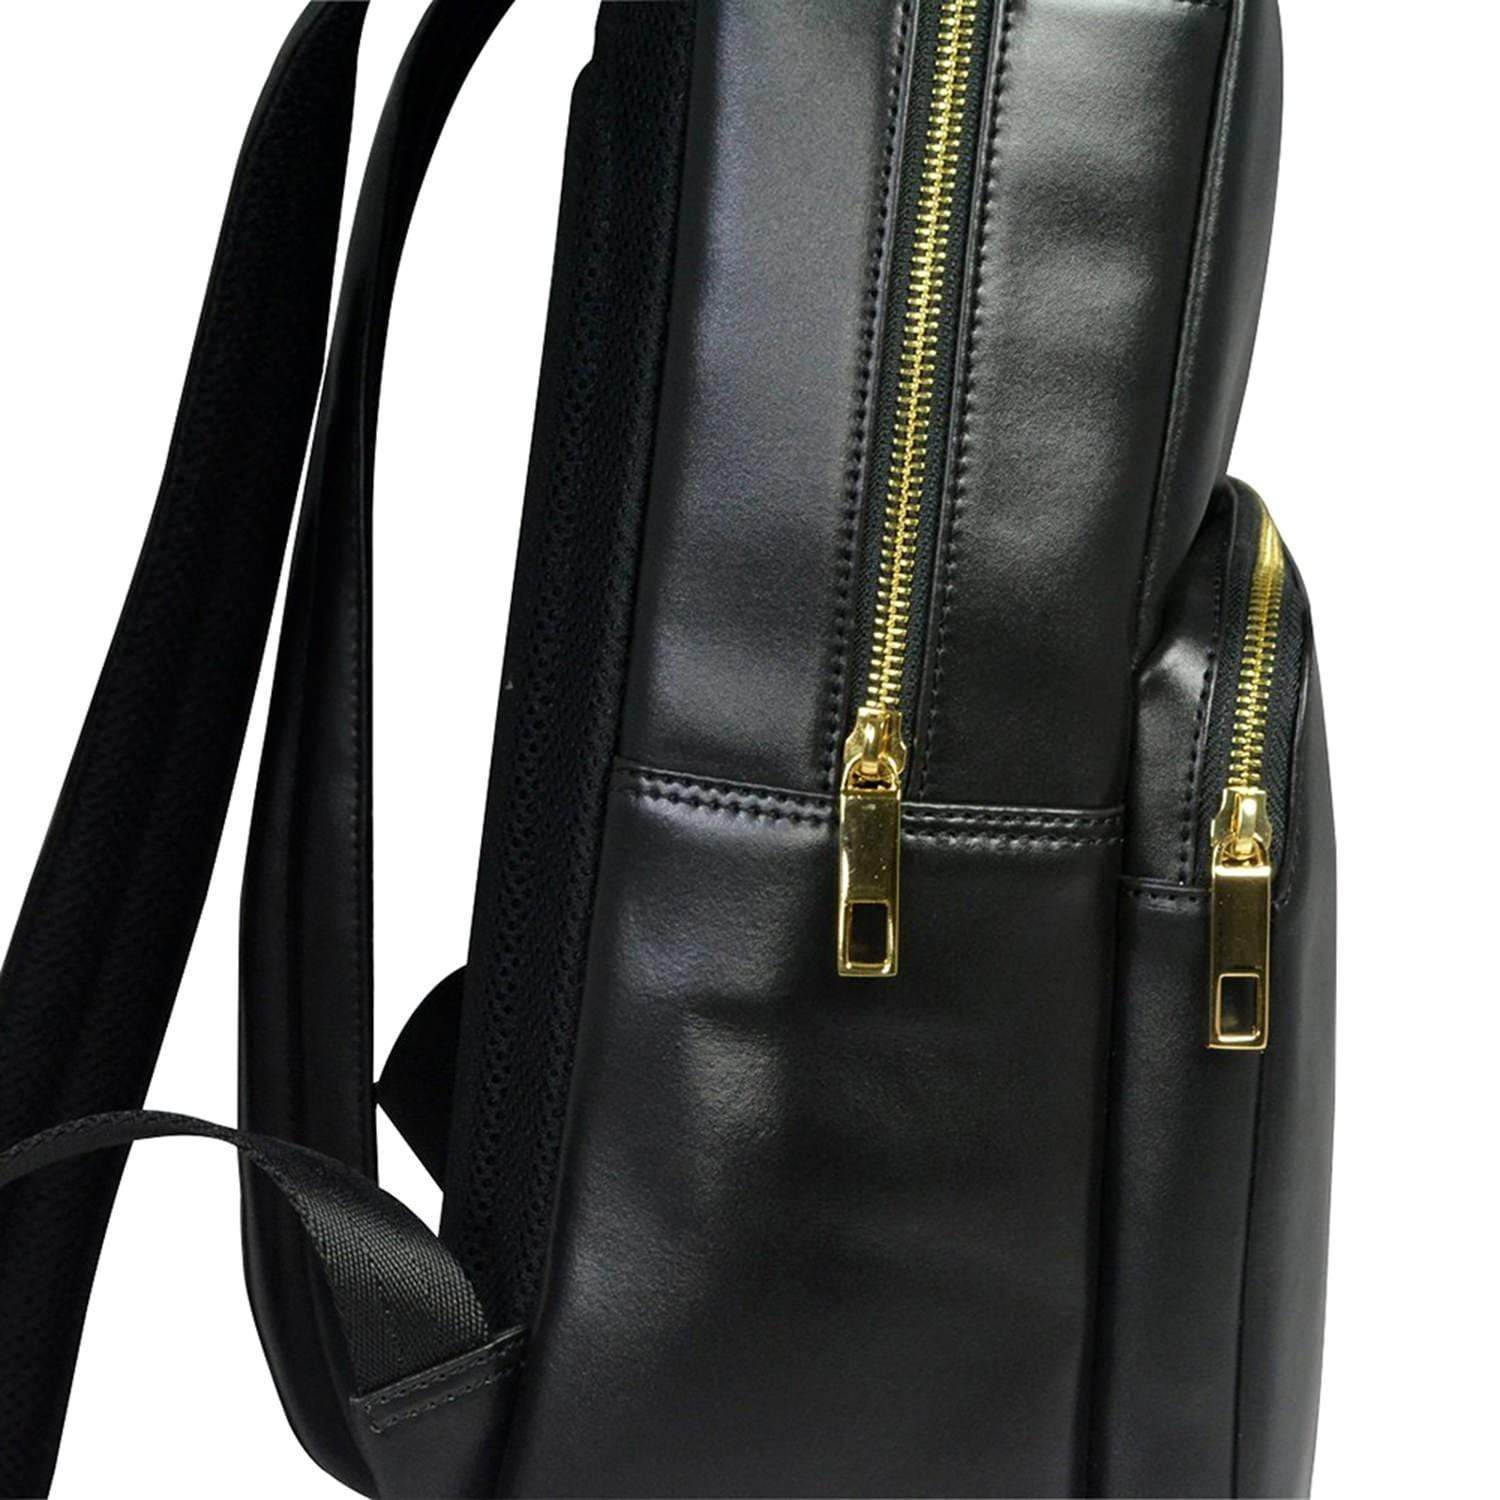 Cross Concordia Fashion Backpack for Men - Black - AC1101272-1-1 - Jashanmal Home